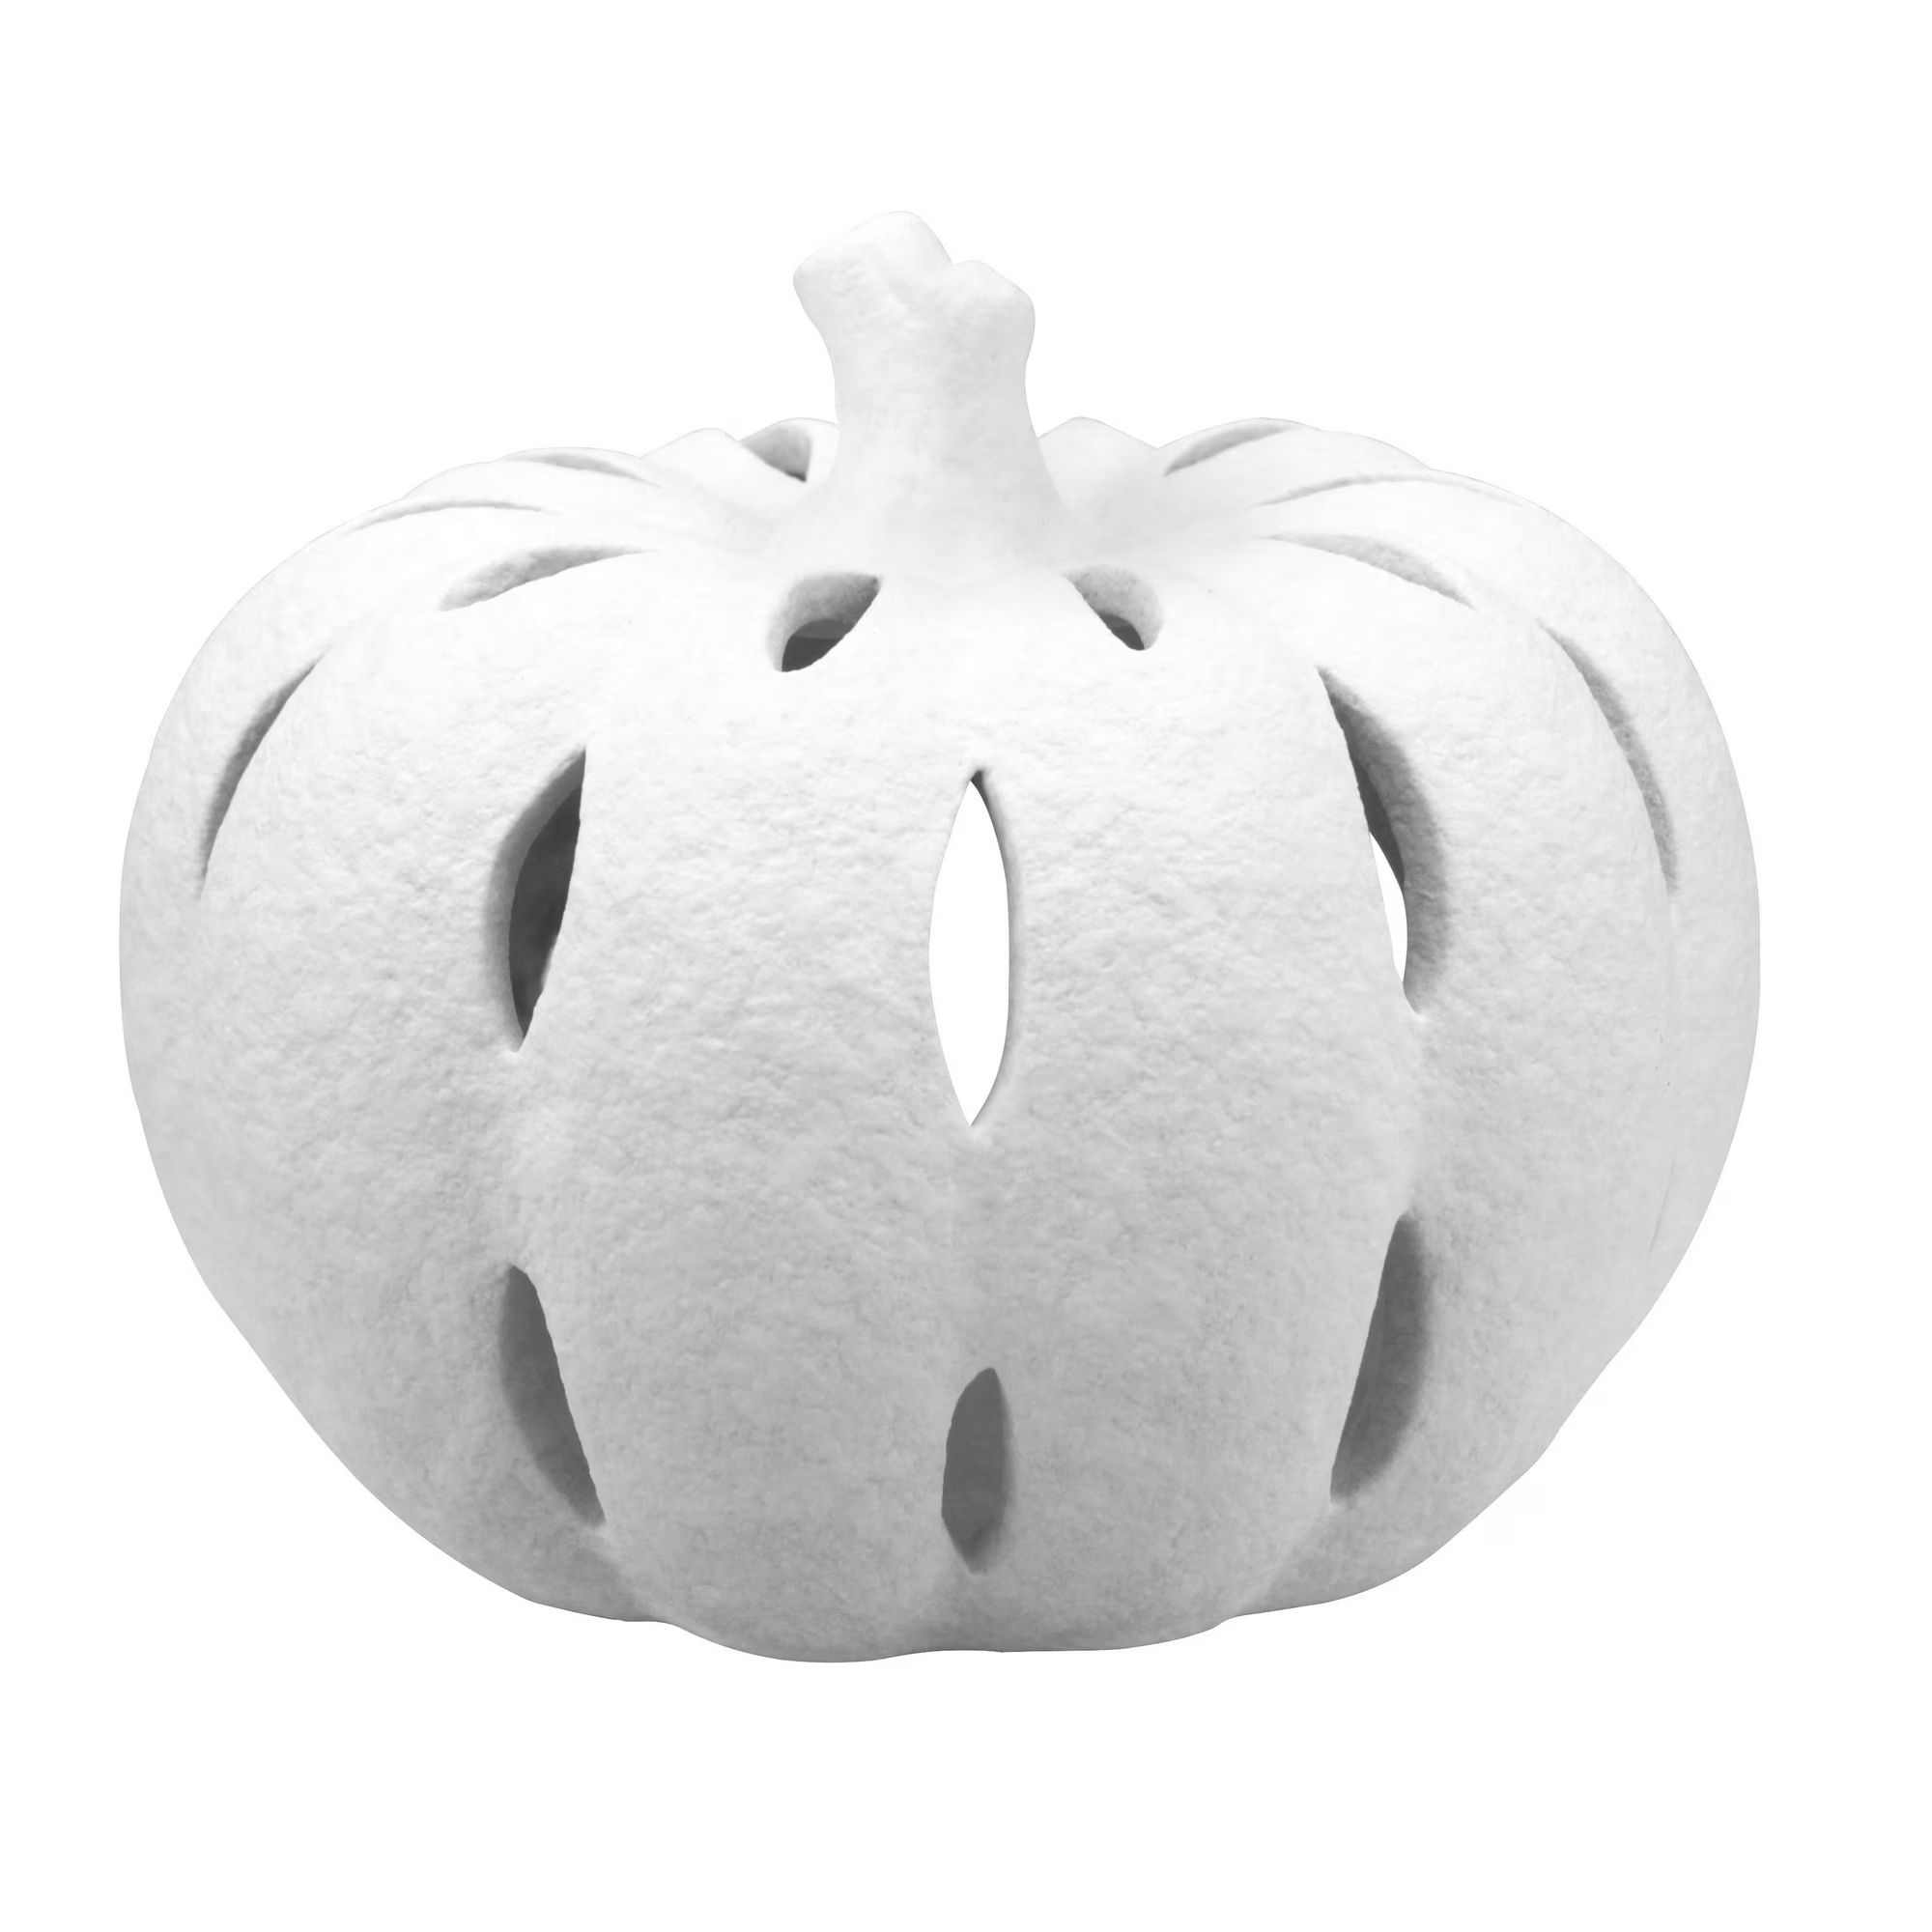 Better Homes & Gardens Small Flameless Pumpkin Candle Holder, White, Ceramic | Walmart (US)